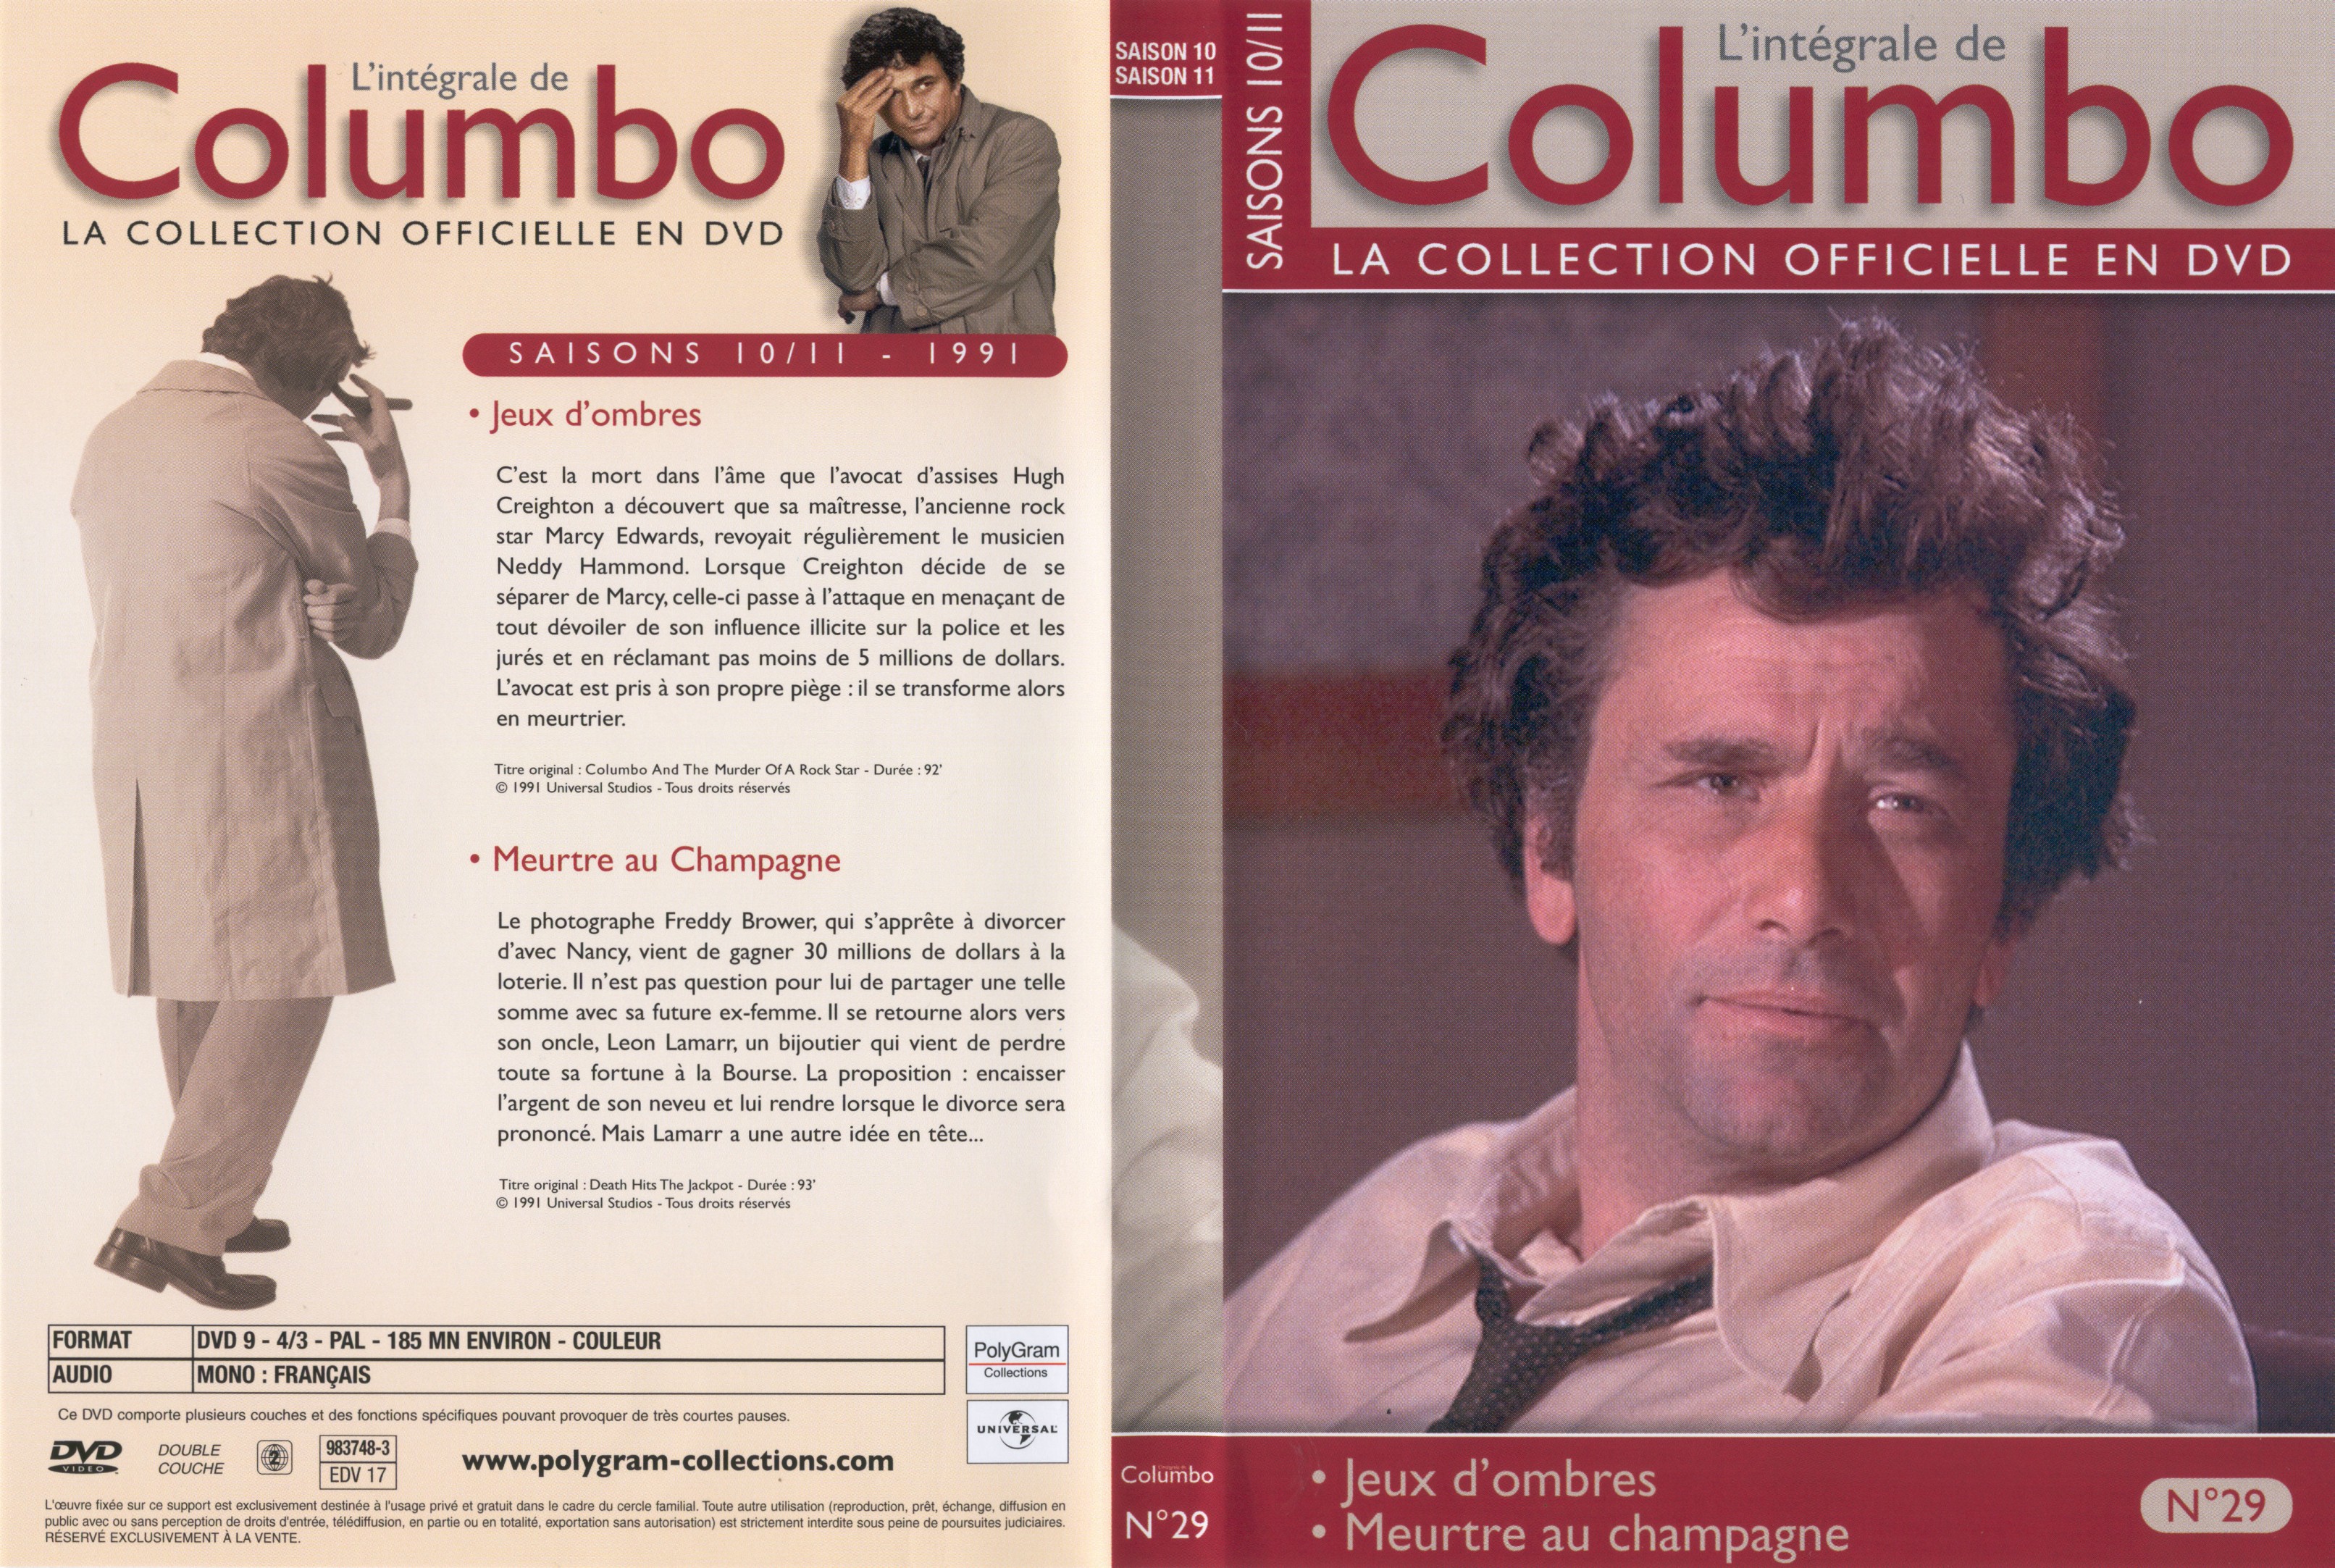 Jaquette DVD Columbo saison 10-11 vol 29